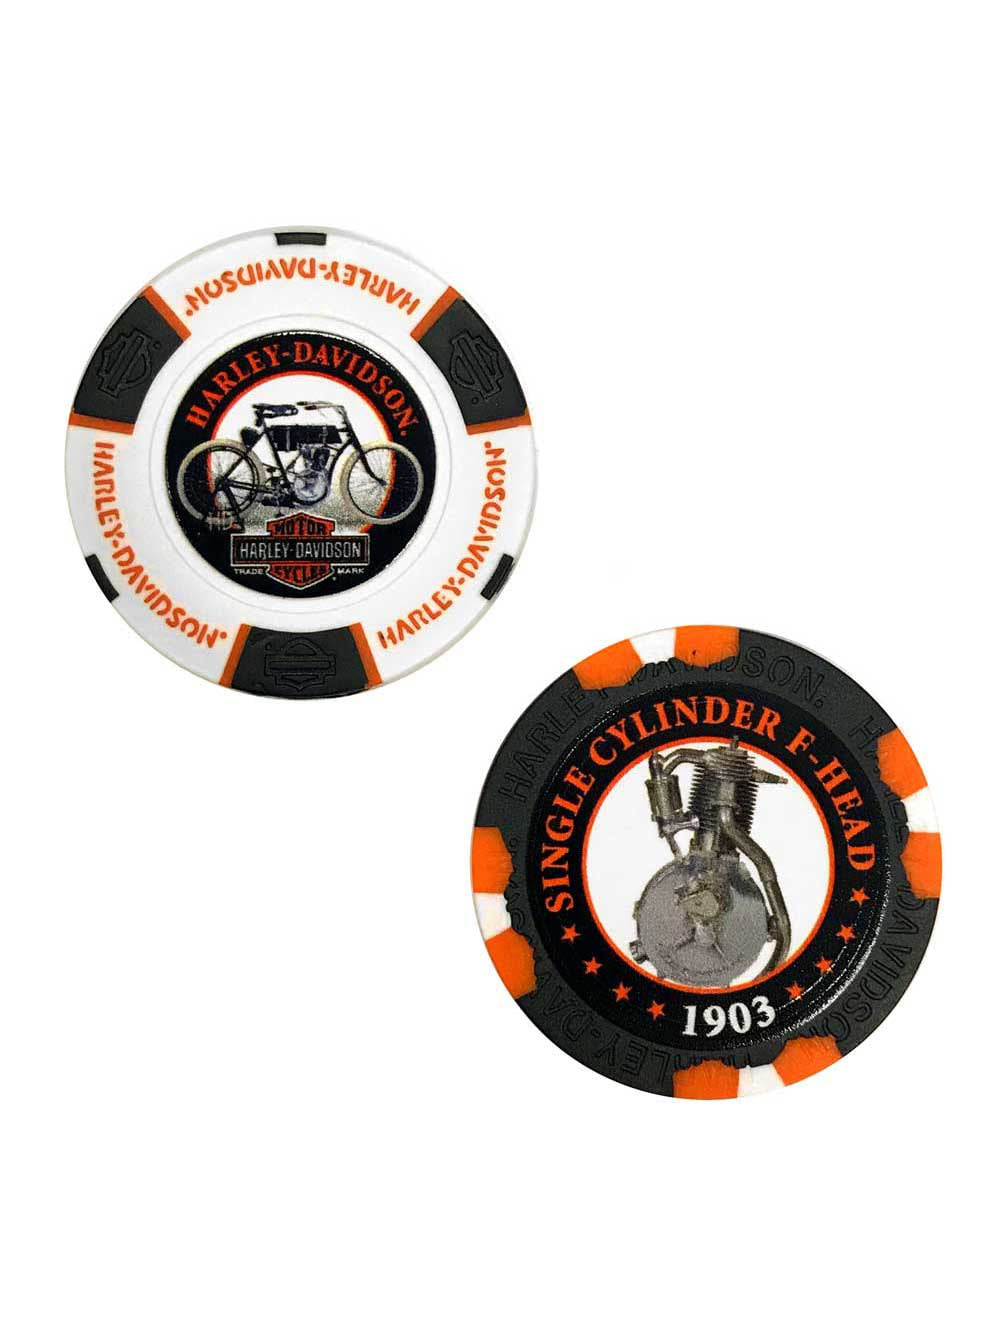 Harley-Davidson 115th Anniversary Collectors Poker Chip Frame Black 6966 Dart World Inc.